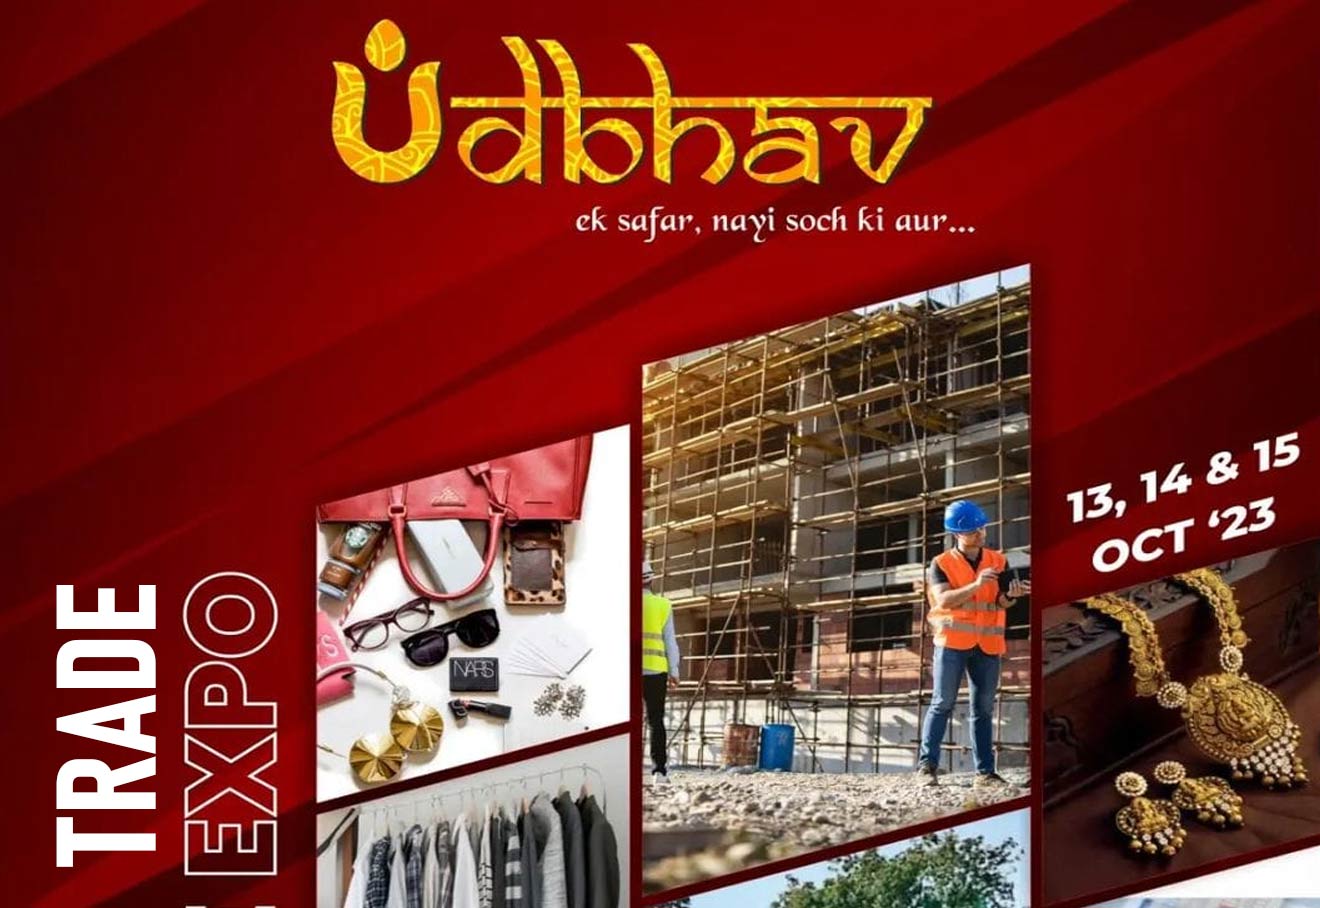 Three-day Udbhav Expo To Begin In Hubballi Tomorrow